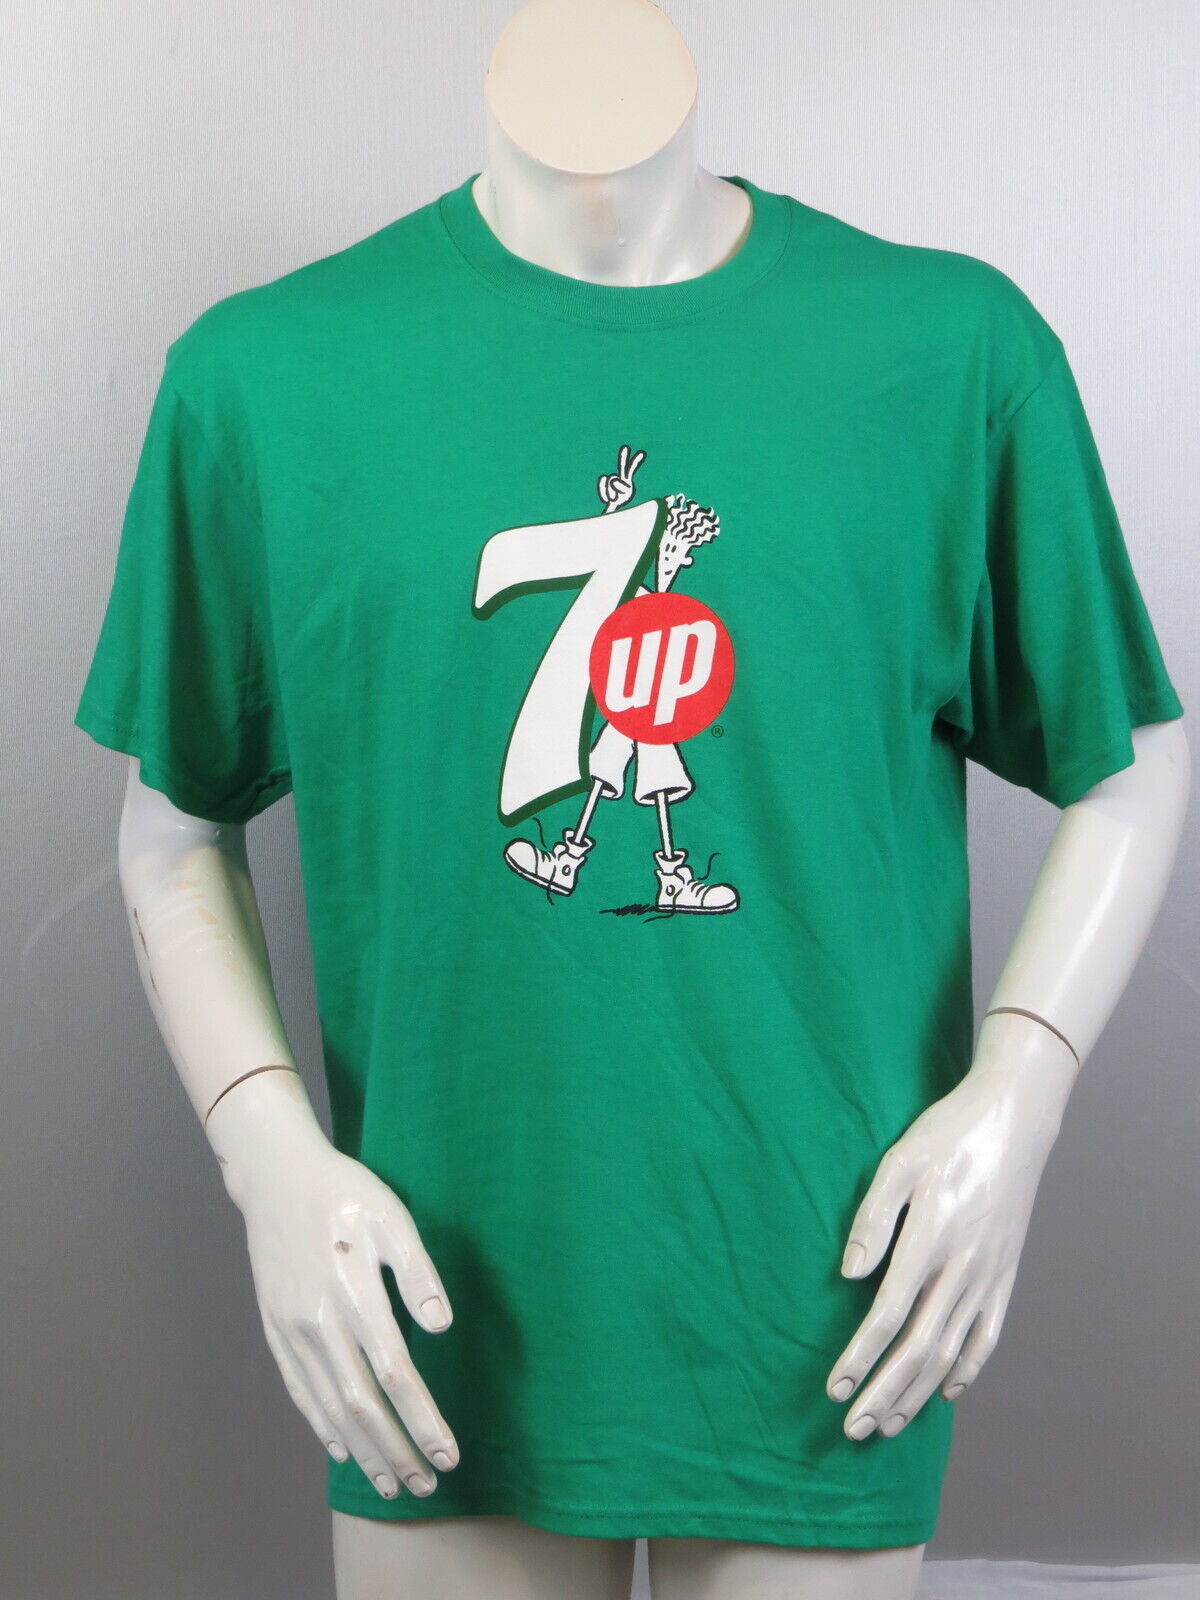 Oprigtighed Gammel mand udløb 7 Up Promotional Shirt - Fido Dido Peace with 7 Up logo - Men's Large | eBay